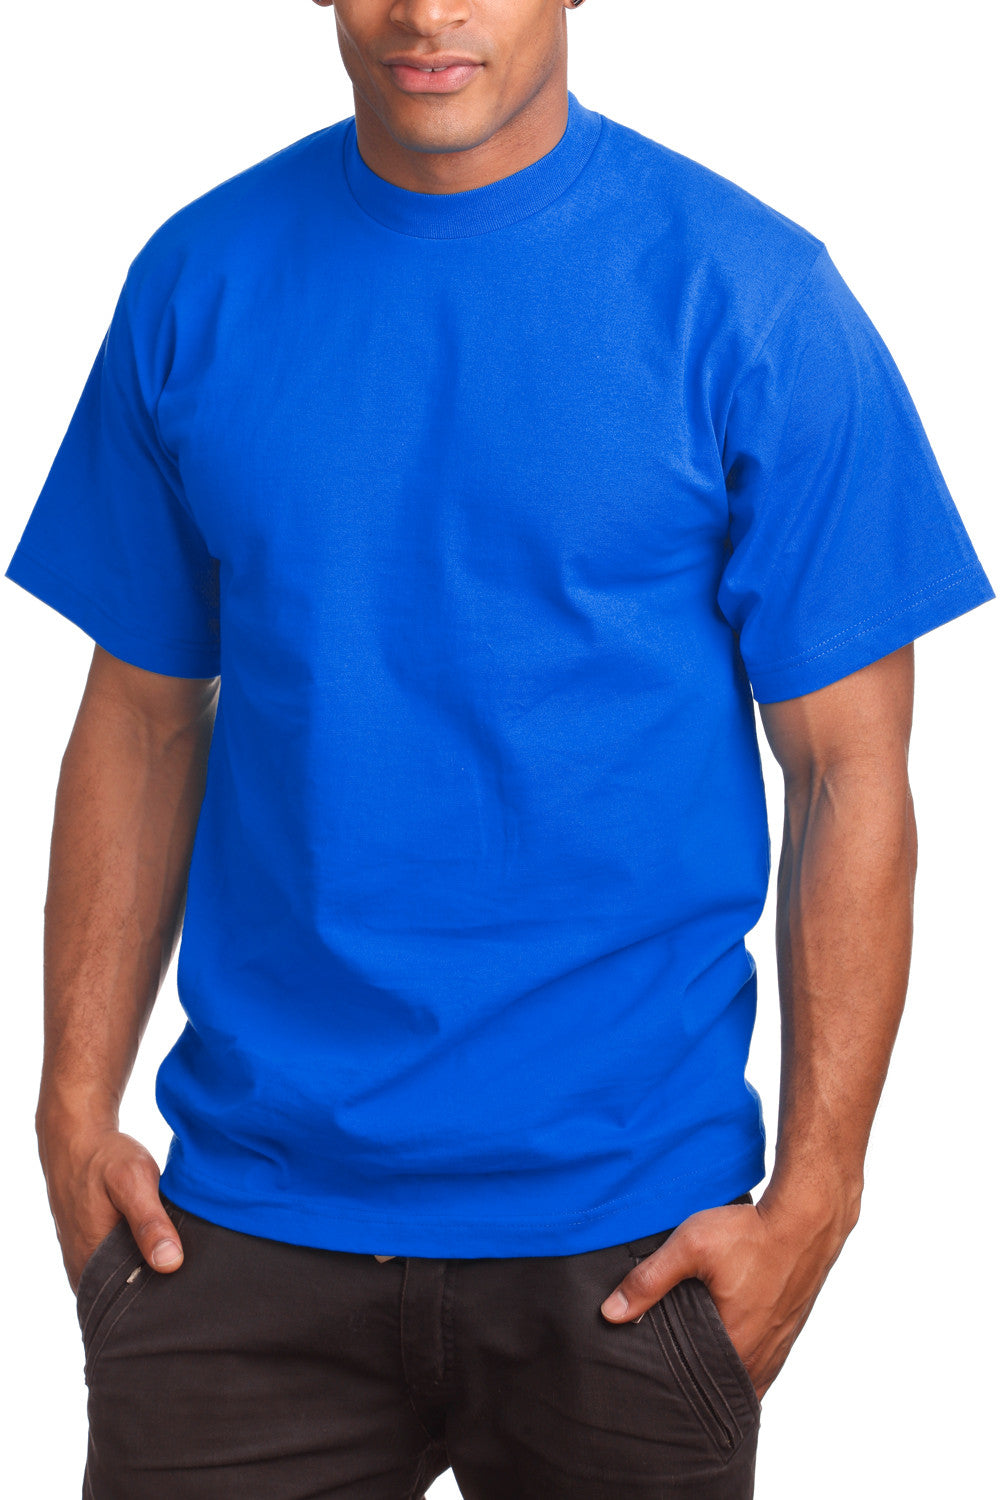 royal blue raglan shirt